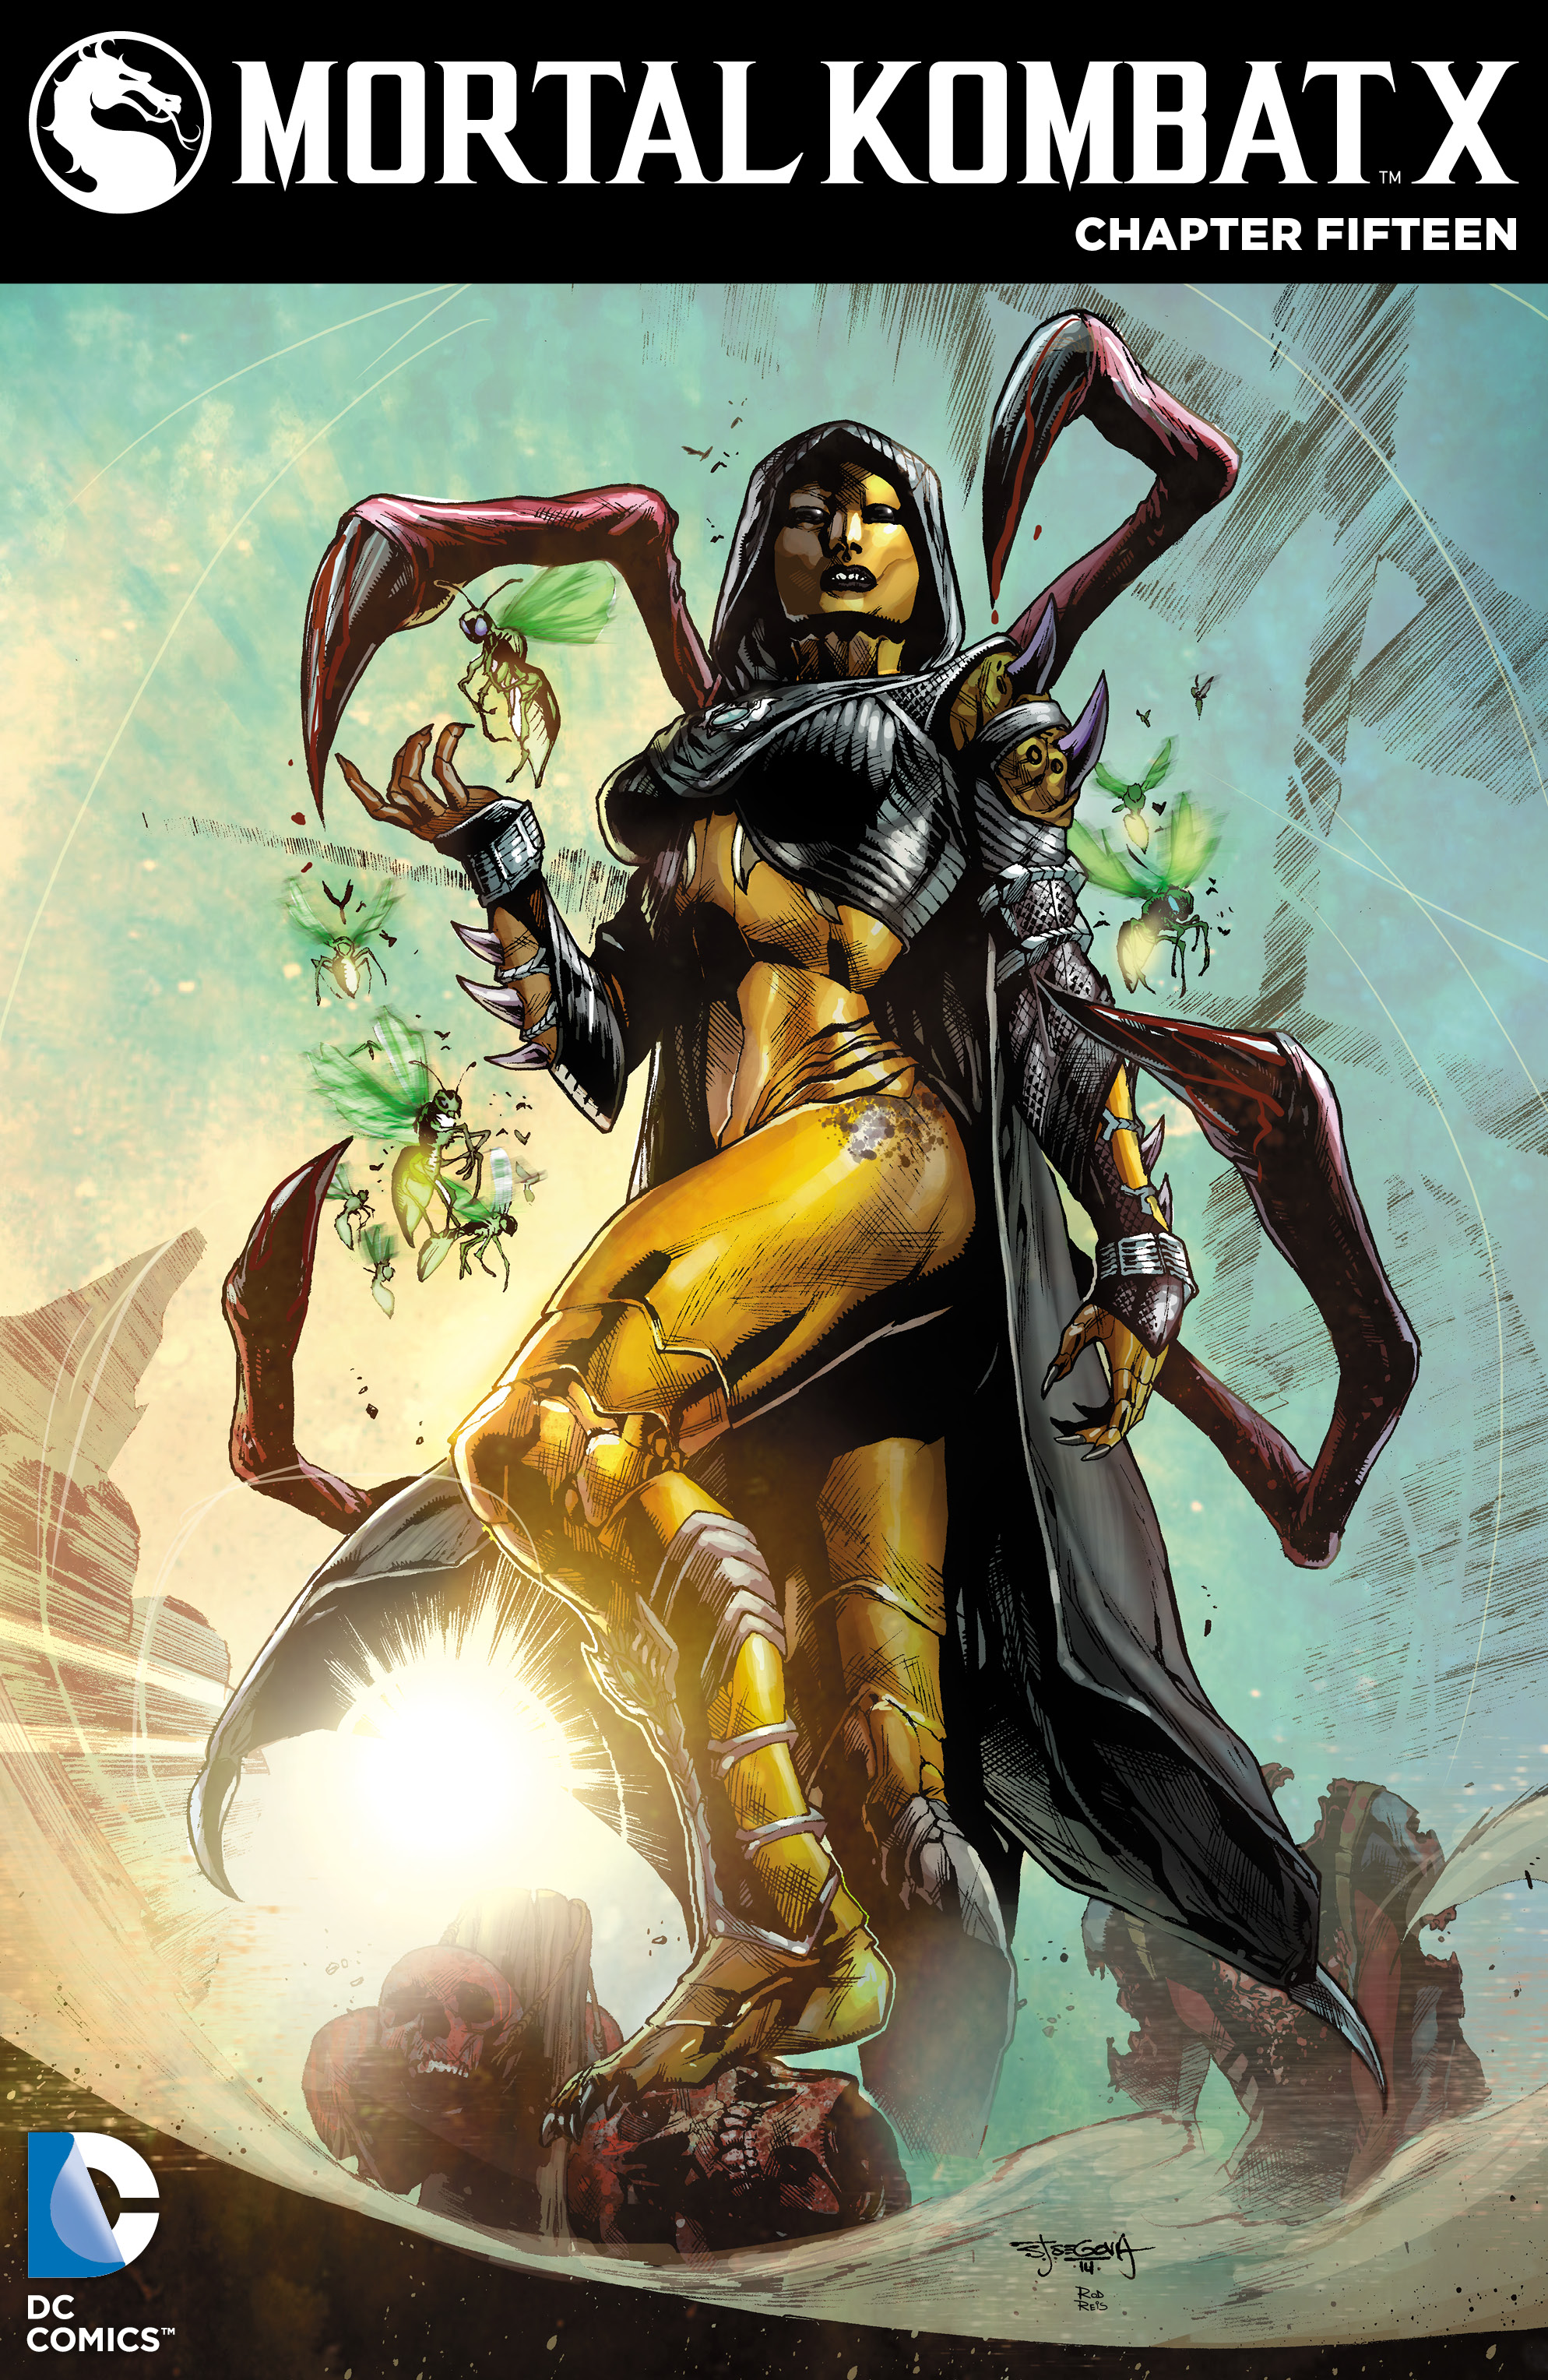 Mortal Kombat X #15 preview images